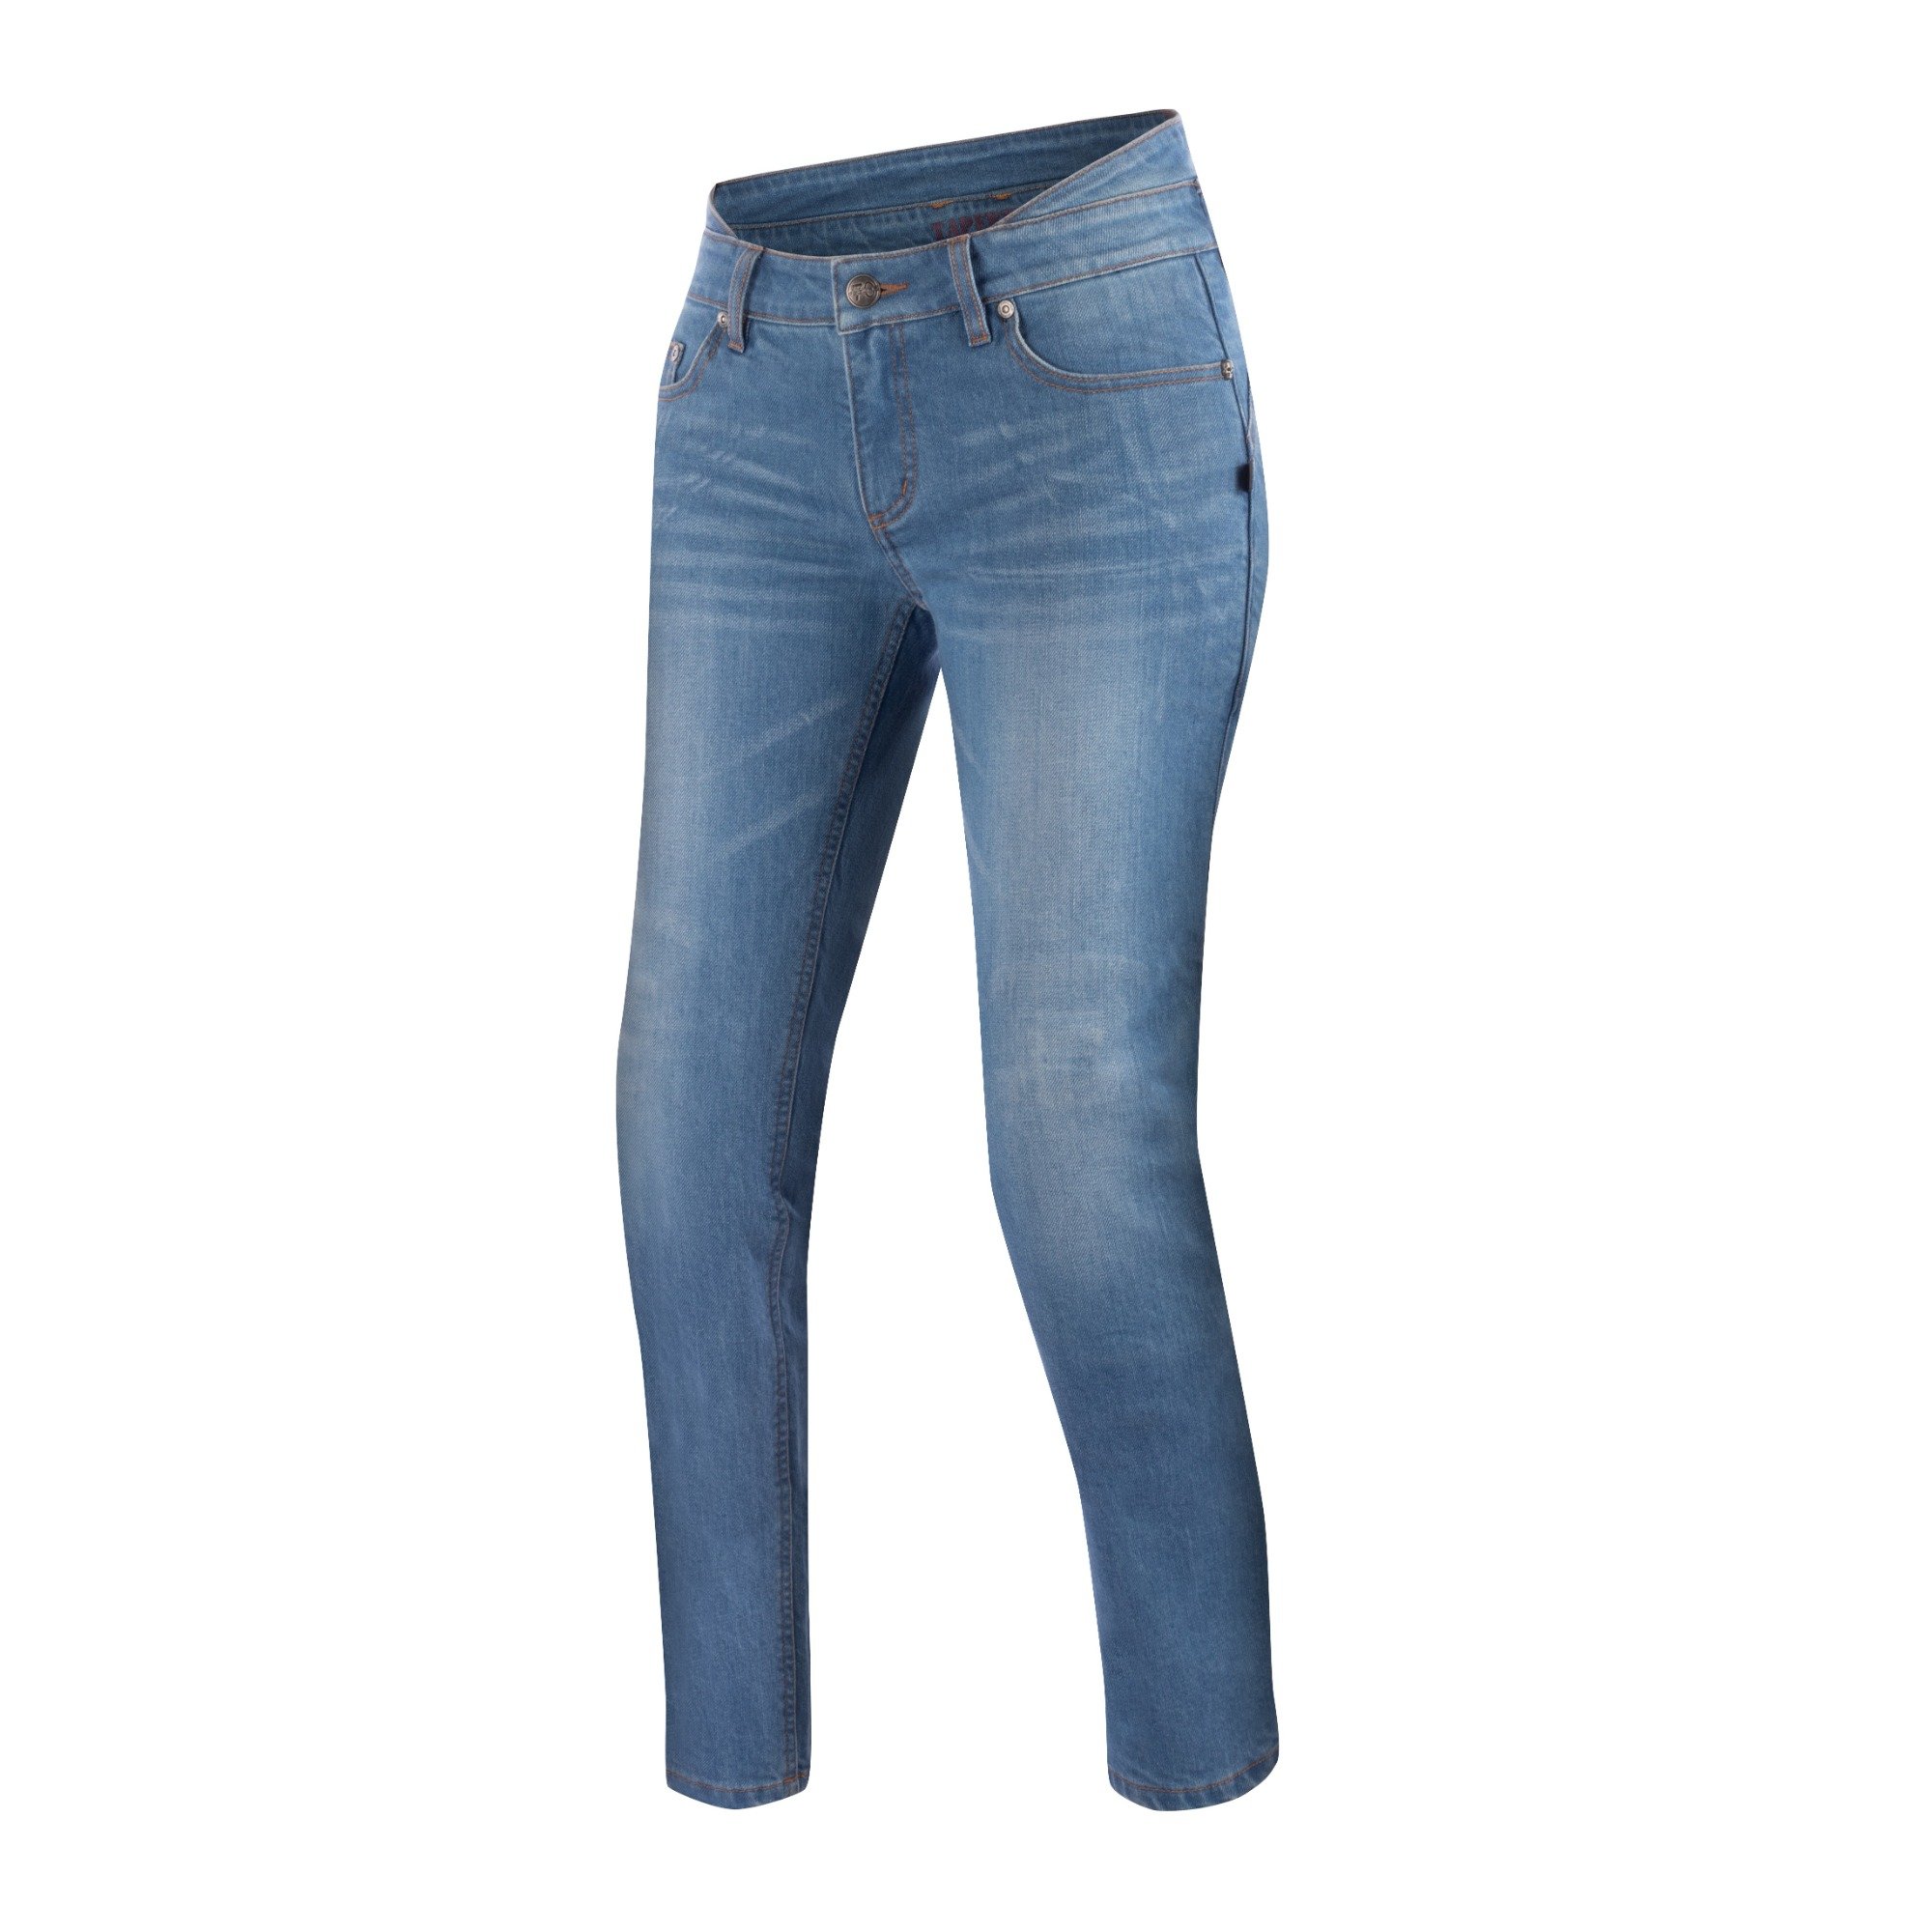 Image of Segura Trousers Lady Rosco Blue Size T6 ID 3660815168189